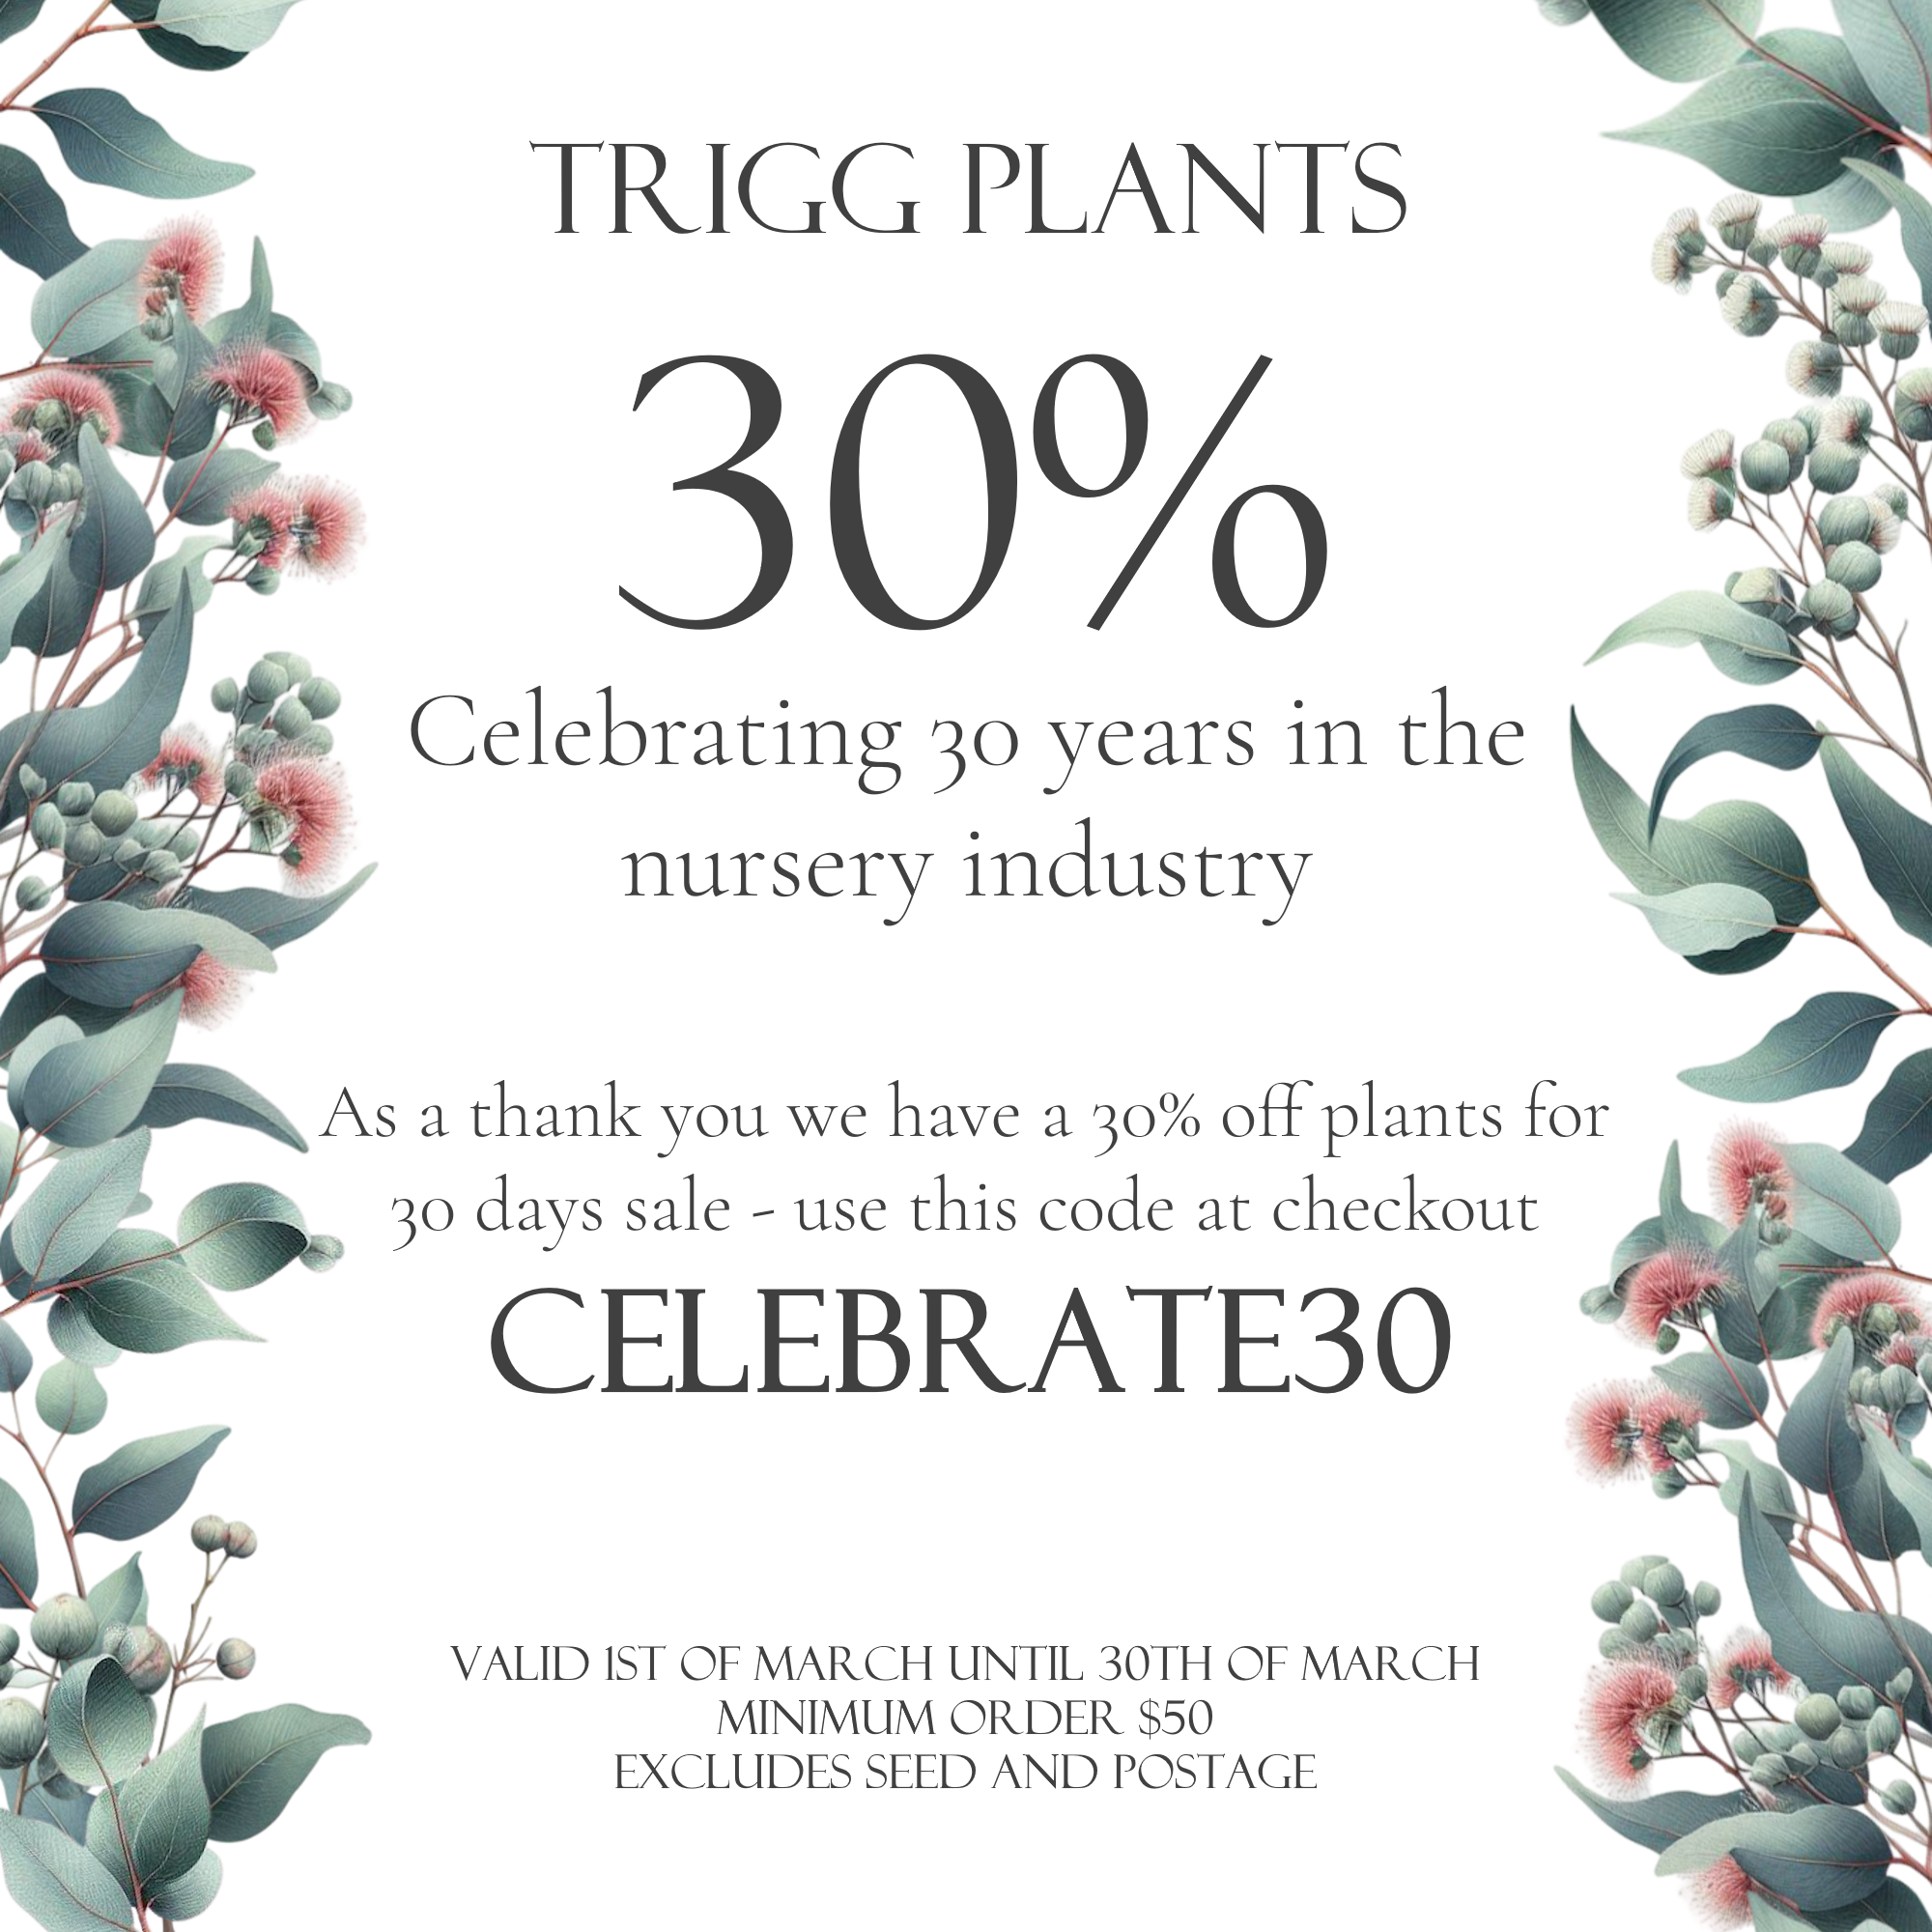 Trigg Plants celebrates 30 years